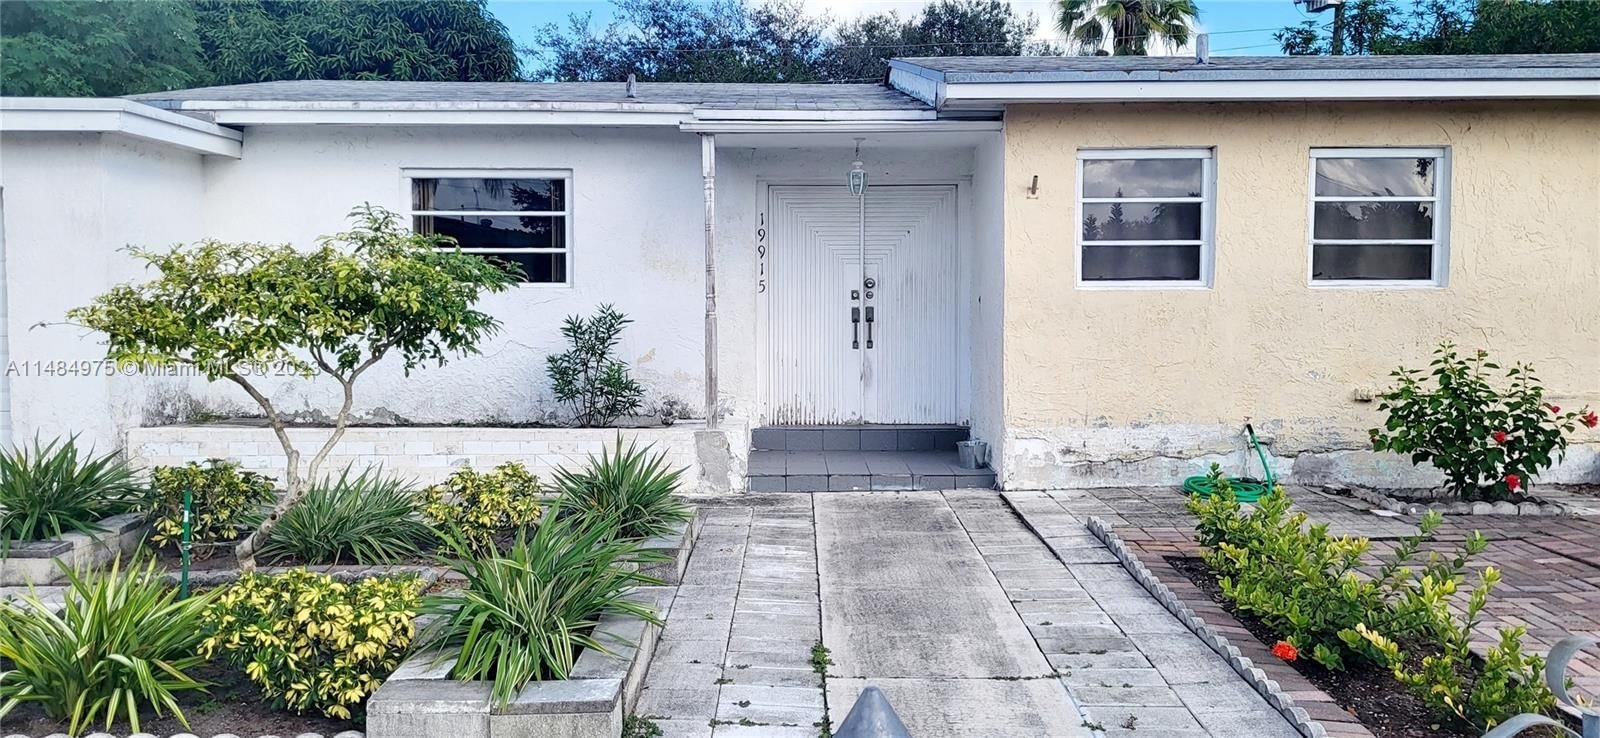 Real estate property located at 19915 14th Ct, Miami-Dade County, Miami, FL